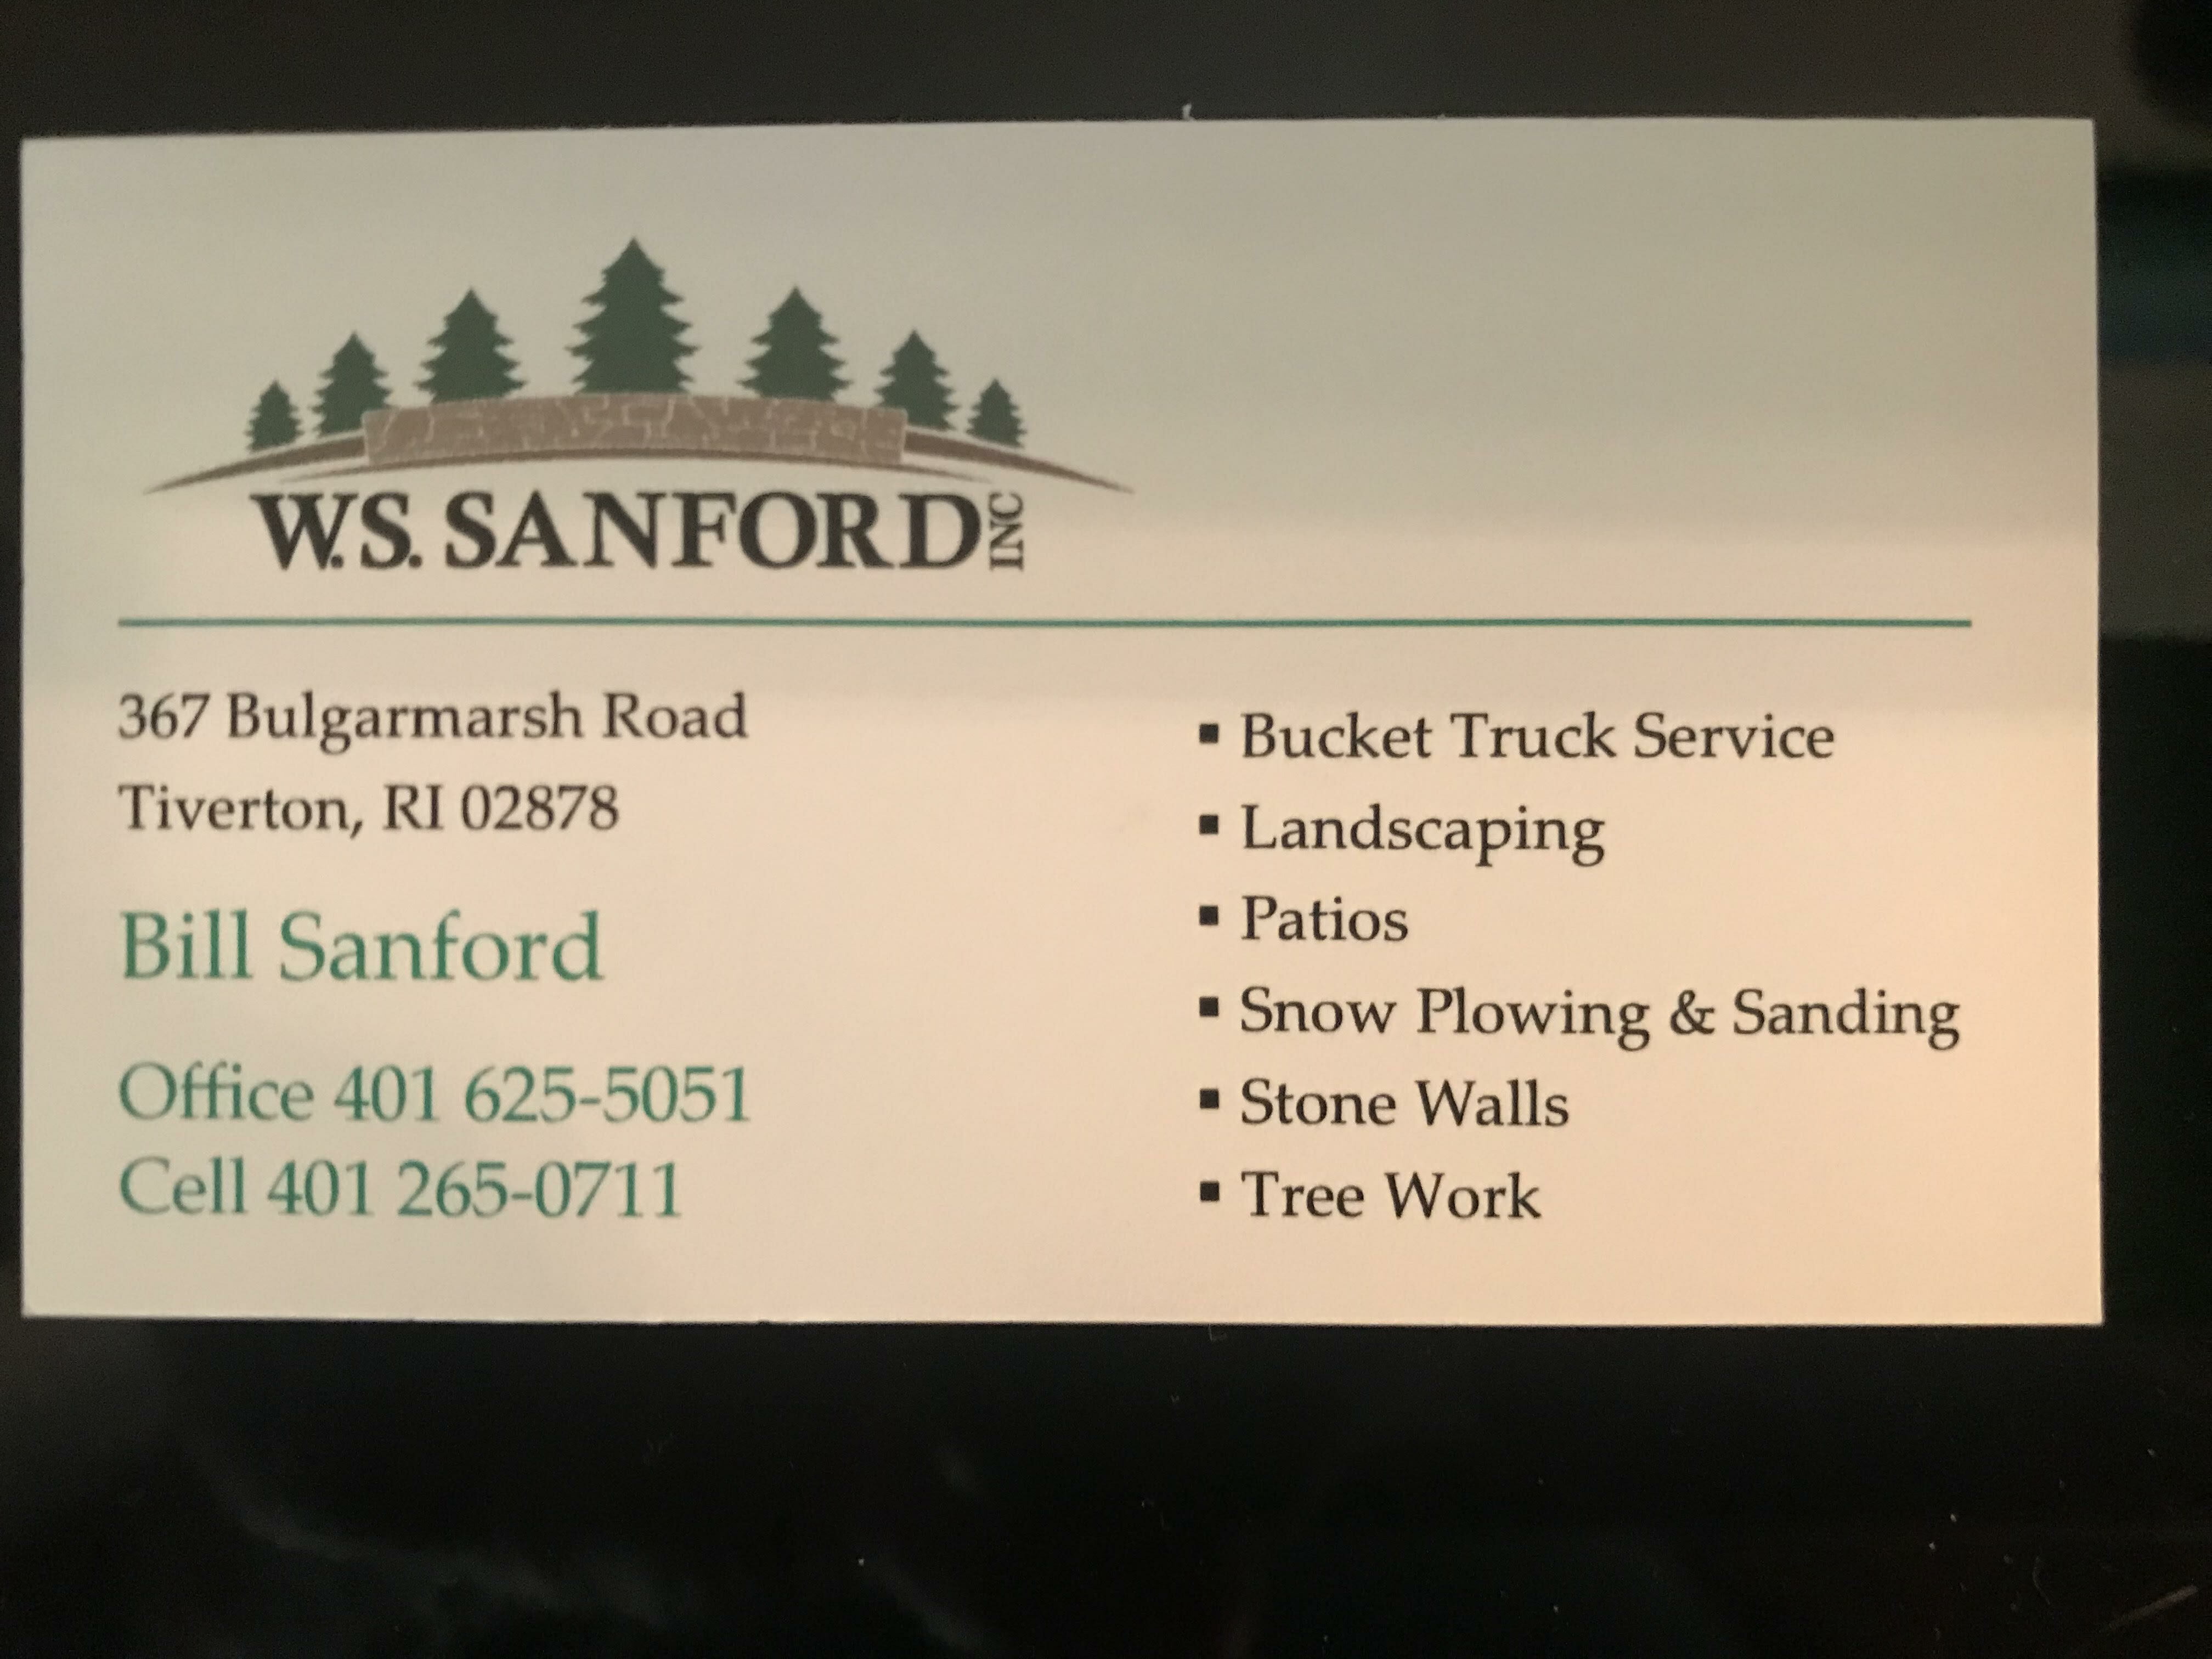 W.S. Sanford Inc